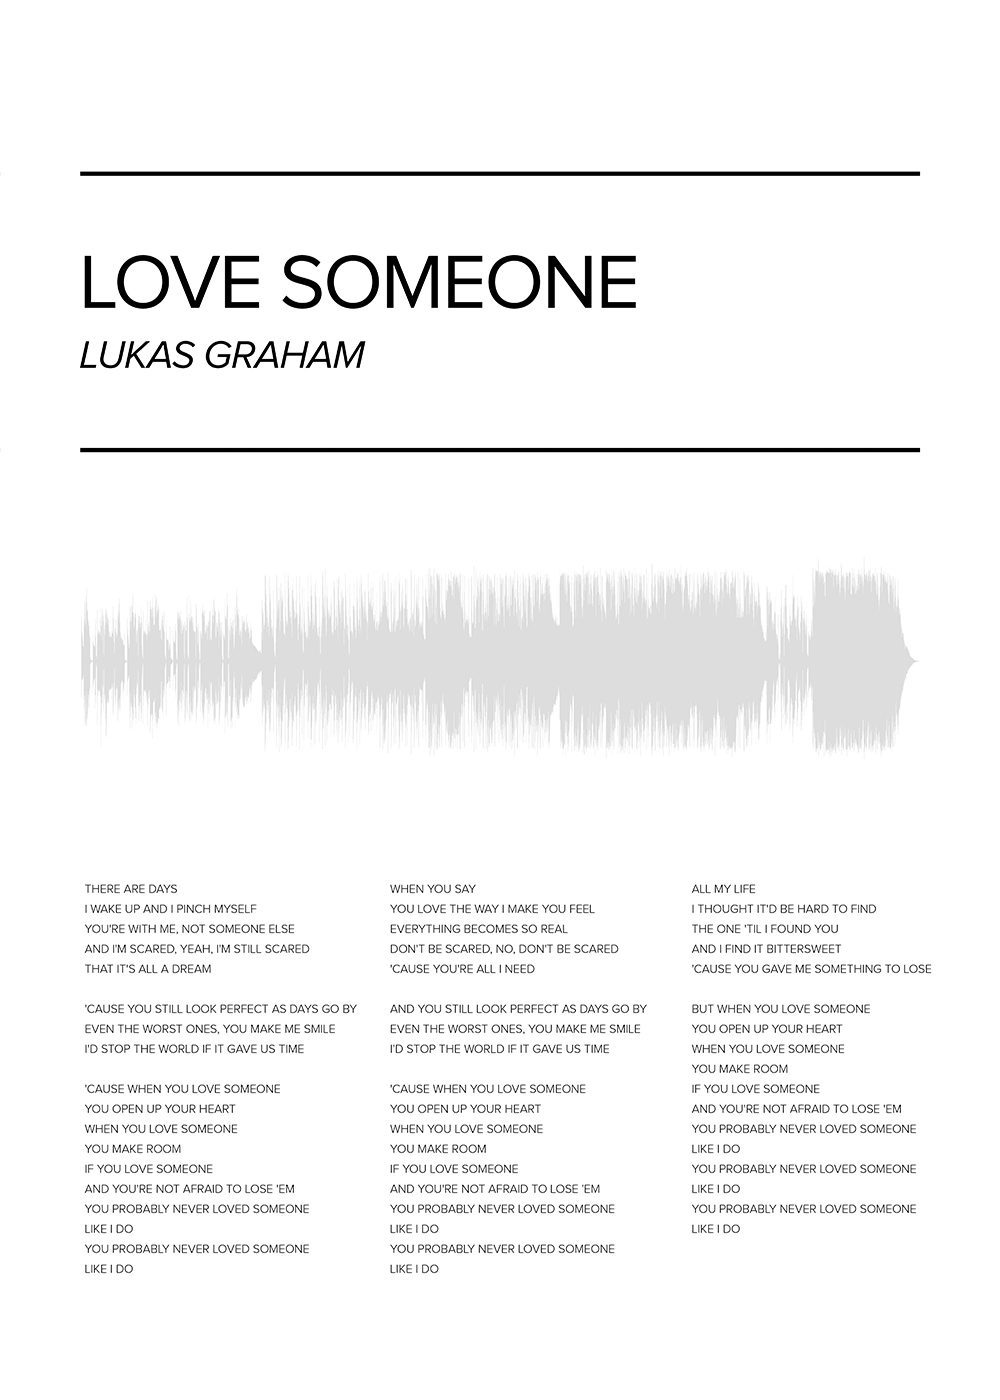 lukas graham - love someone poster